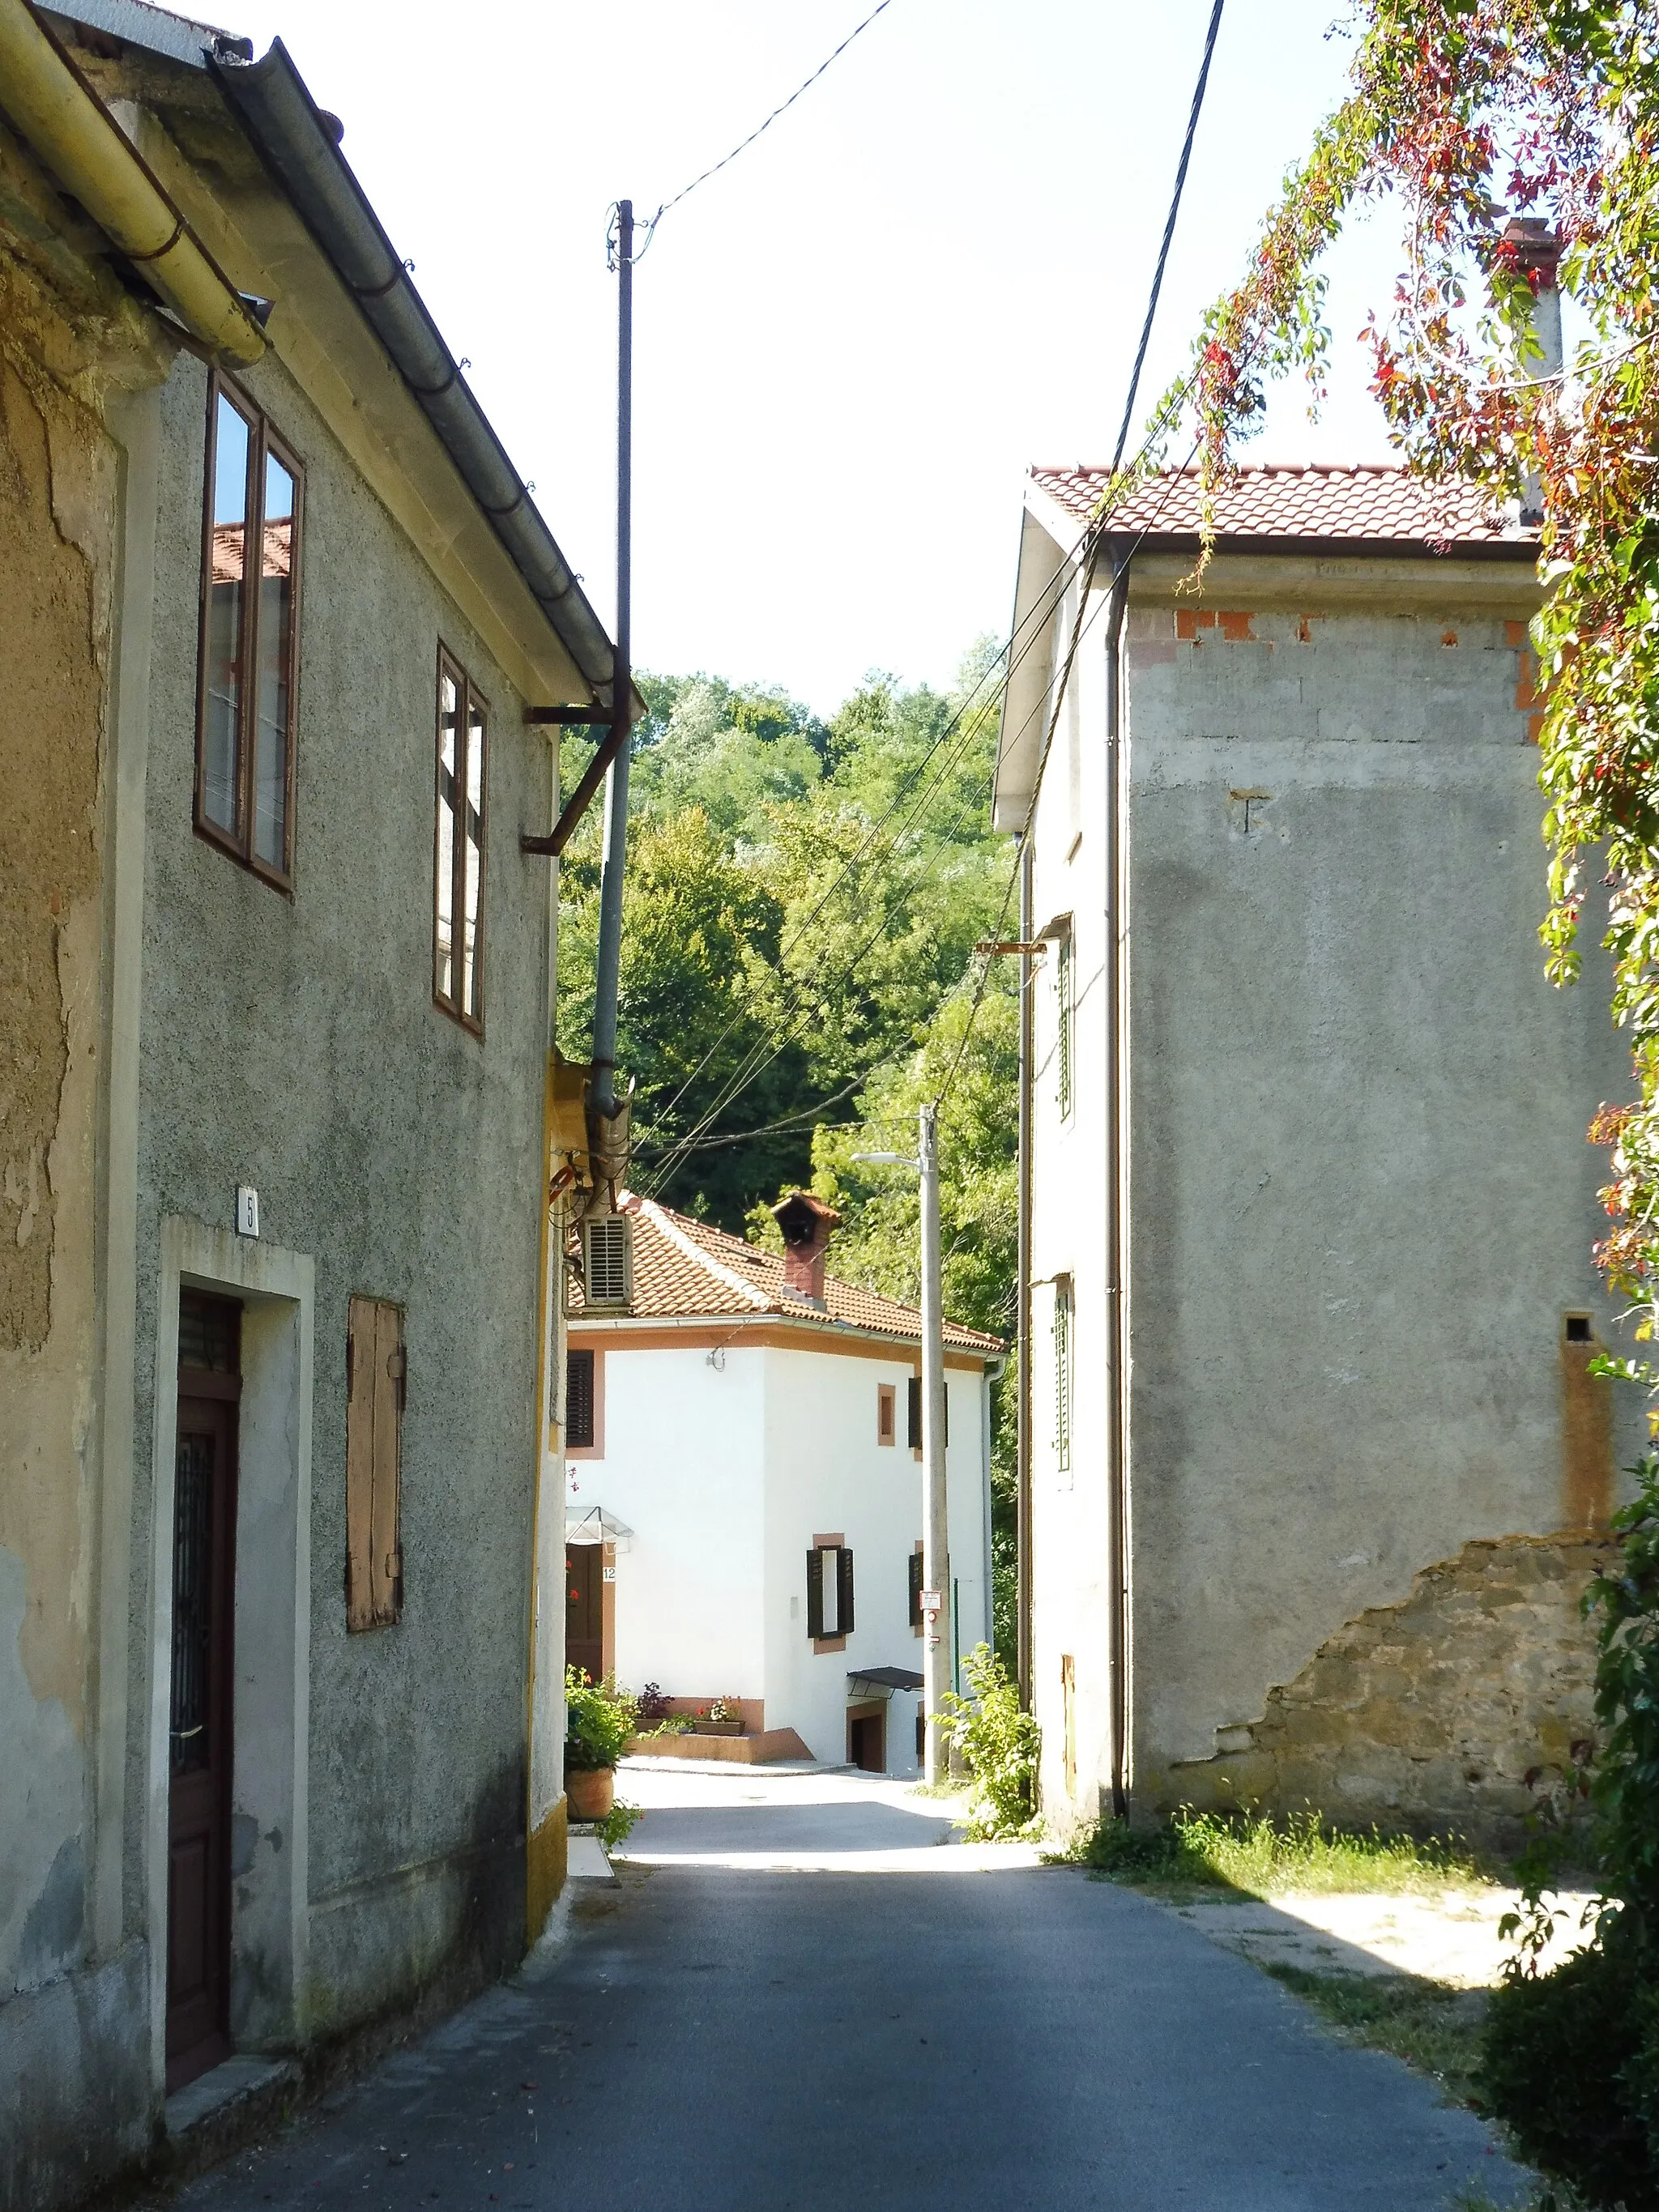 Photo showing: The village of Drastin in Jelenje municipality, Croatia